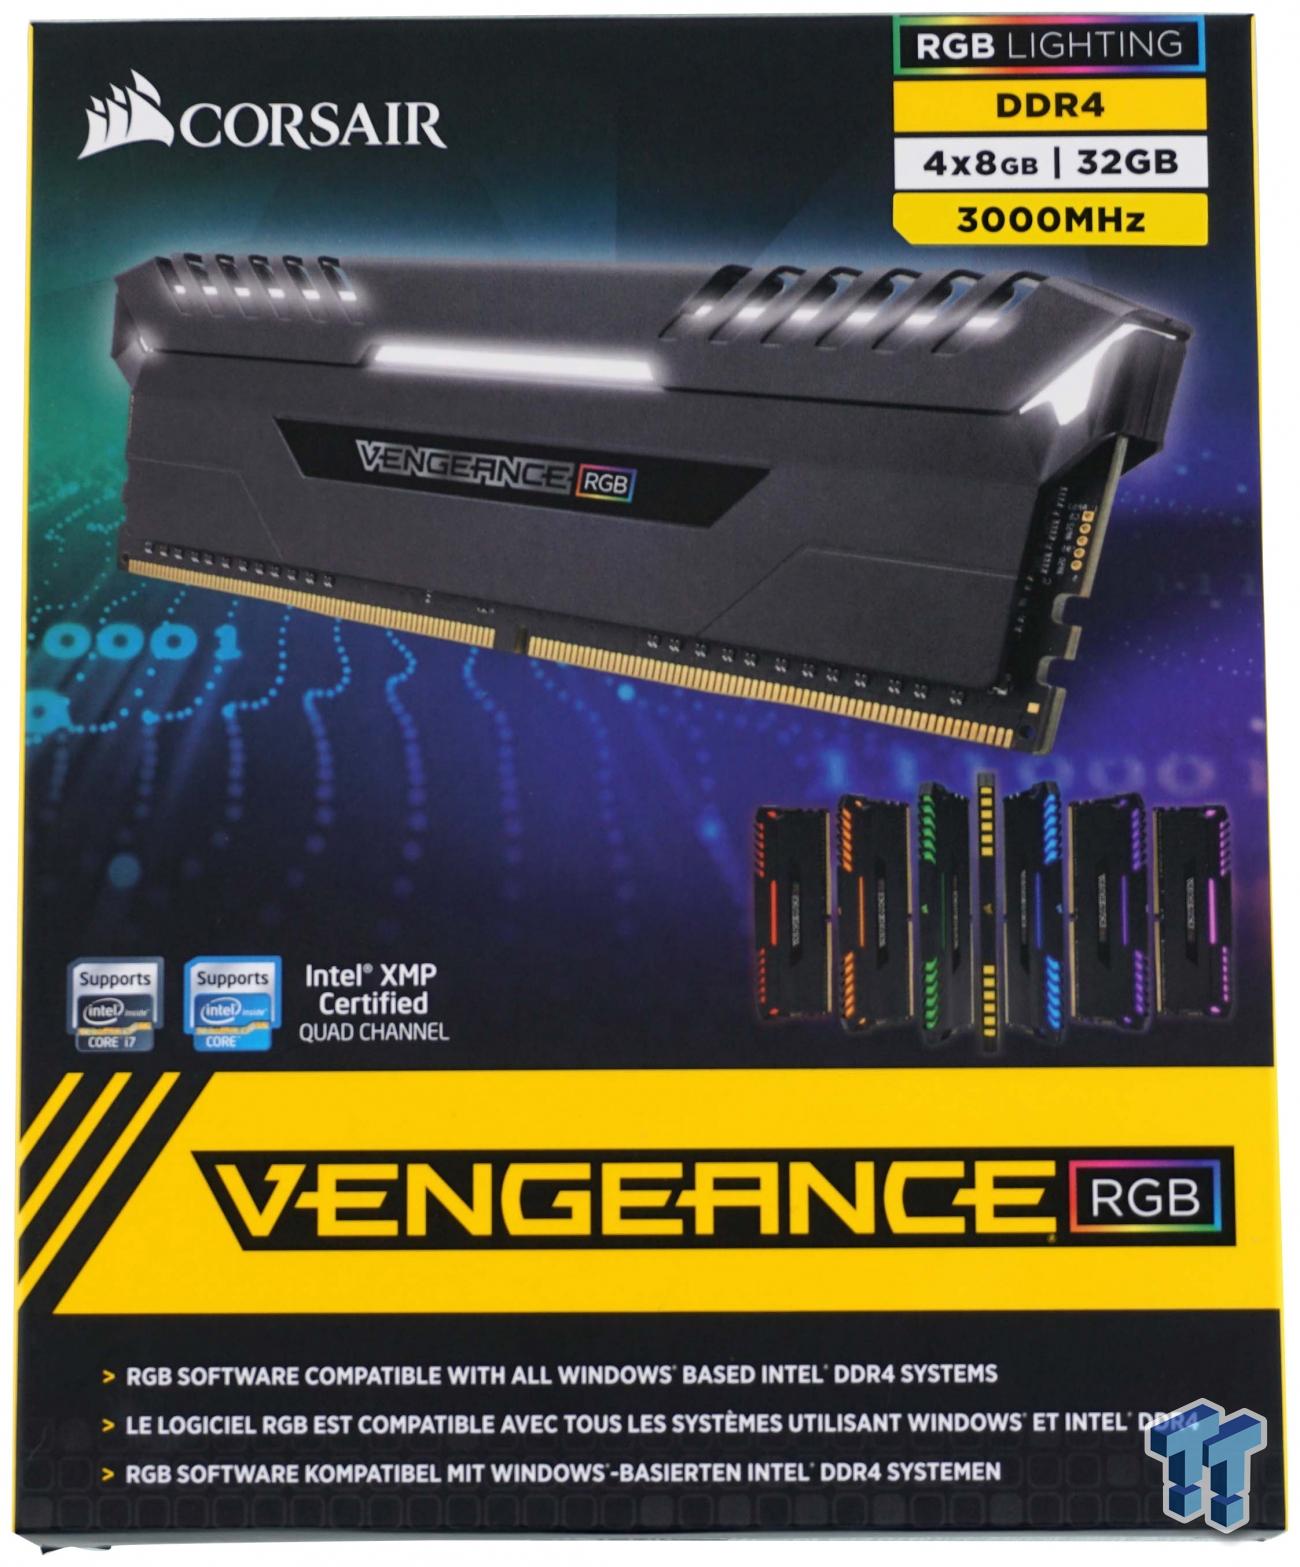 Vengeance RGB DDR4-3000 32GB Memory Kit Review